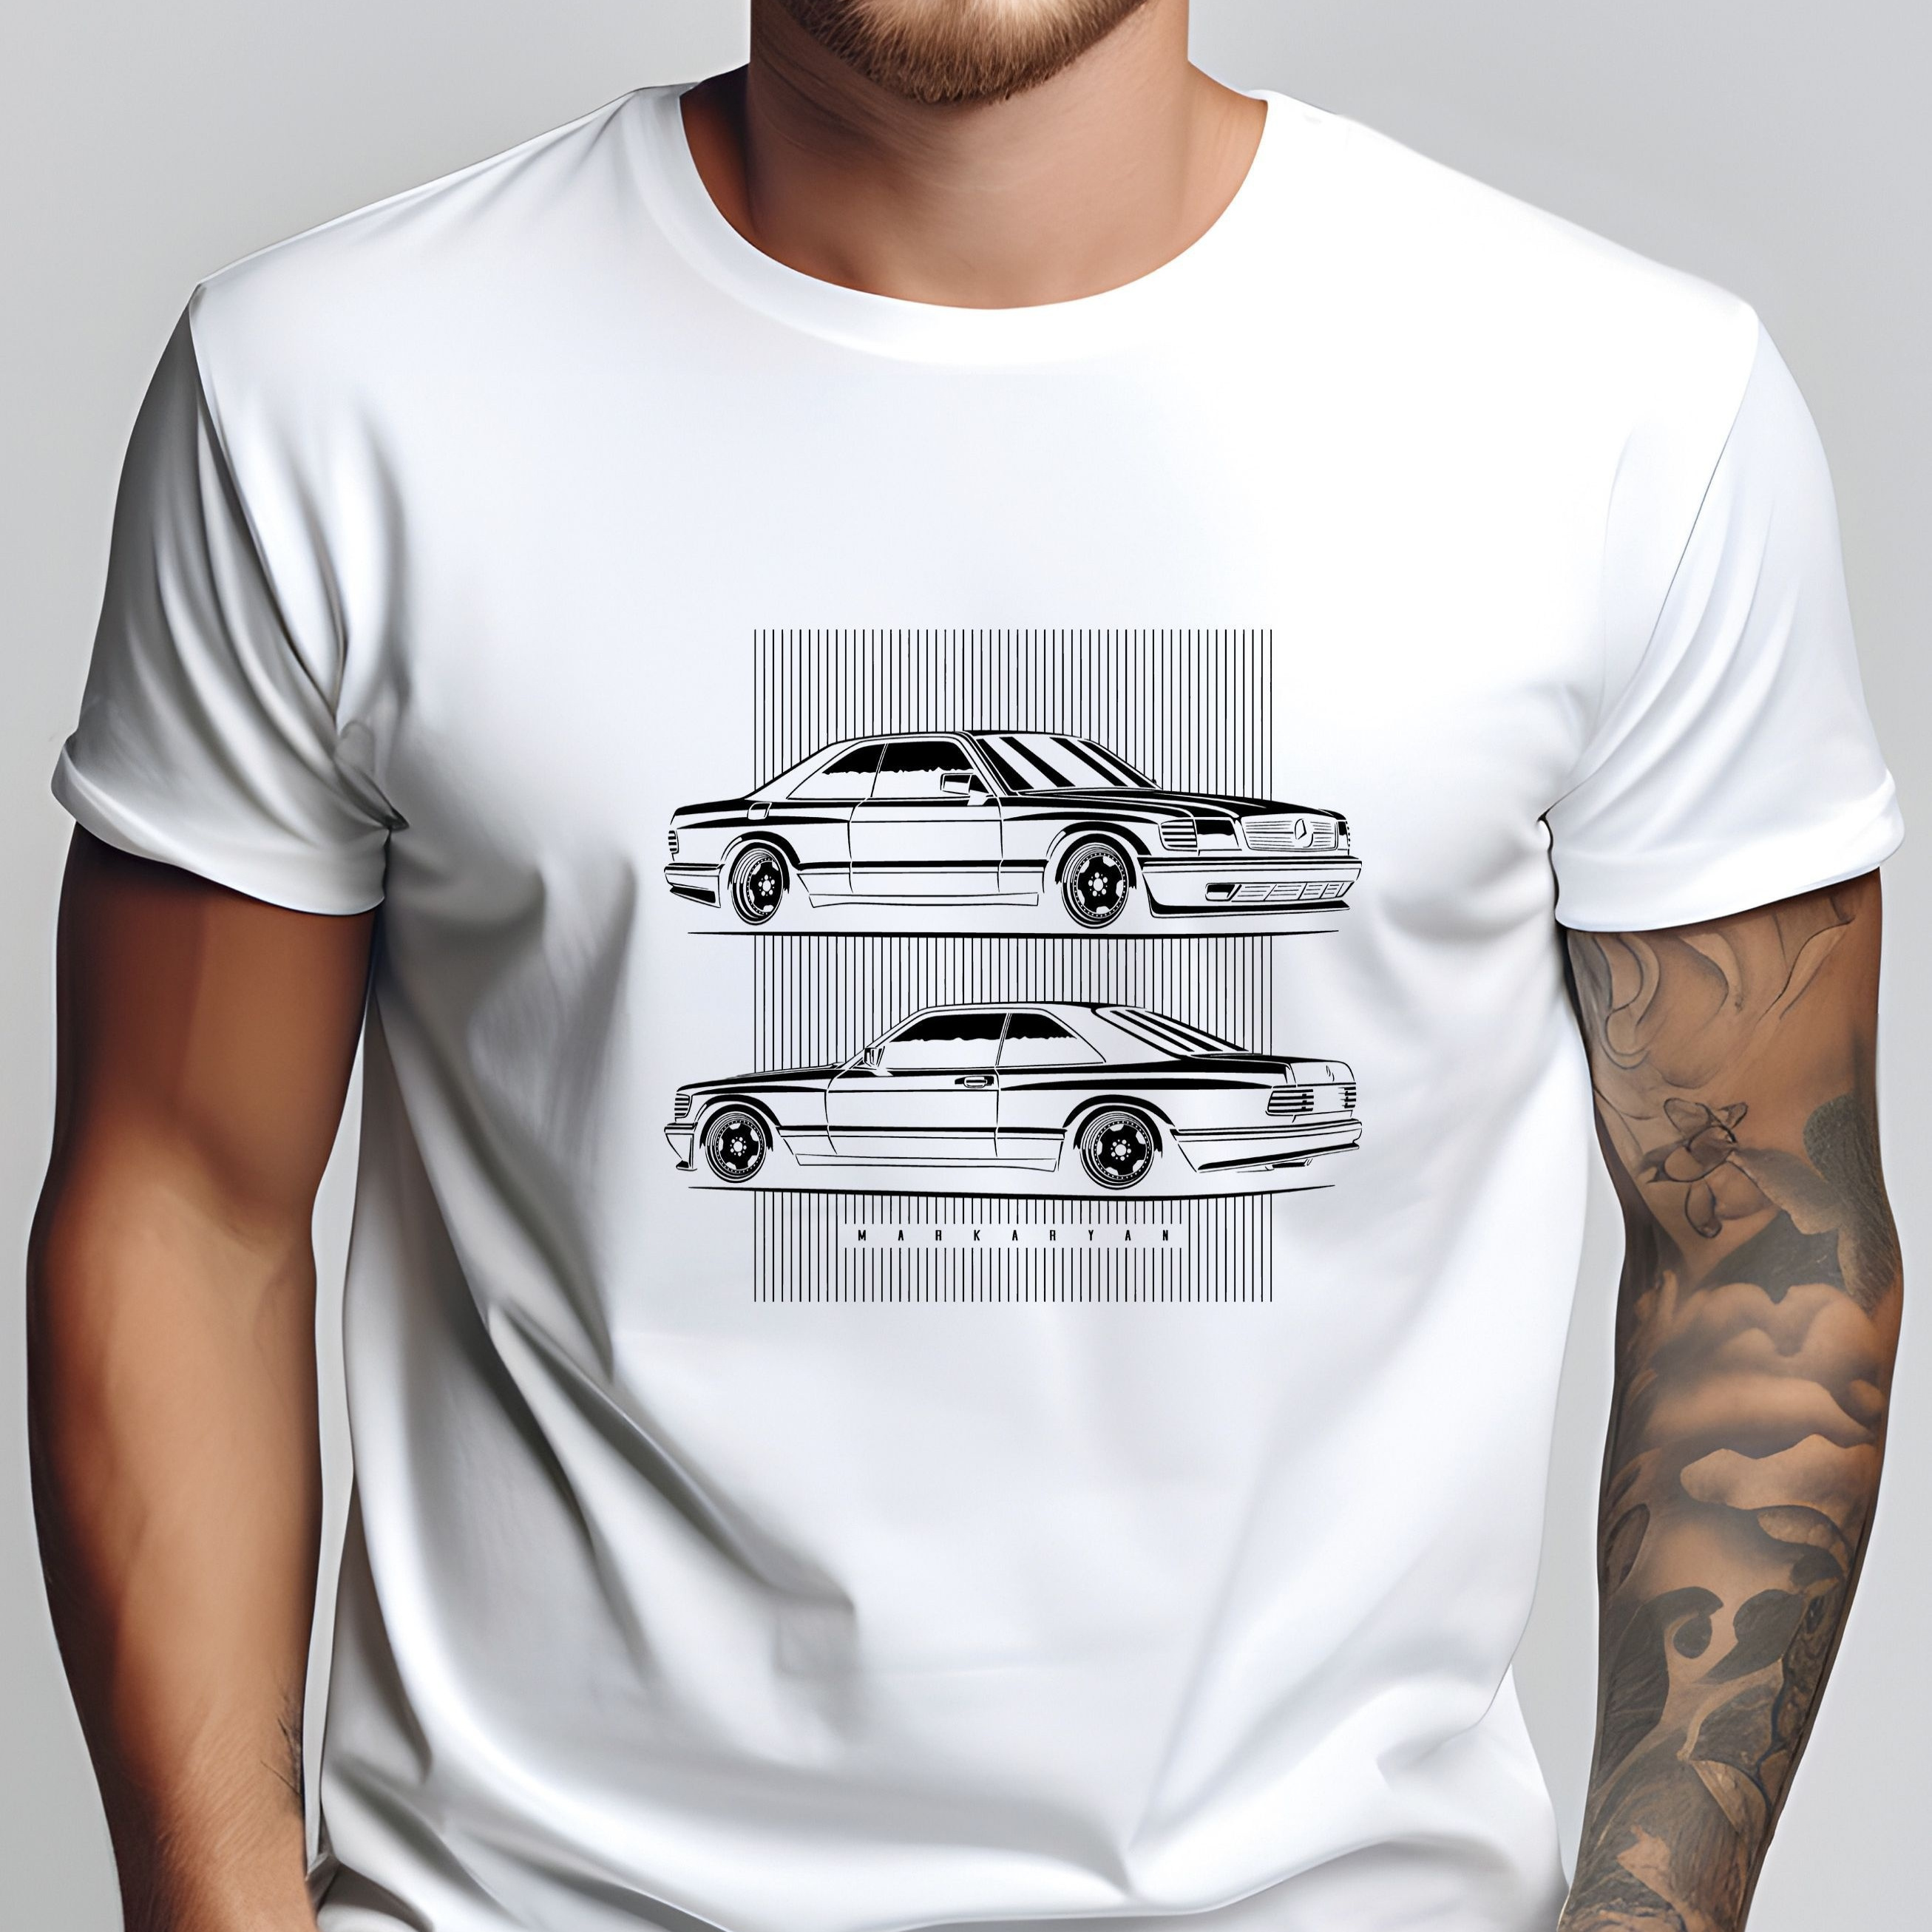 

Cars Print Tee Shirt, Tees For Men, Casual Short Sleeve T-shirt For Summer